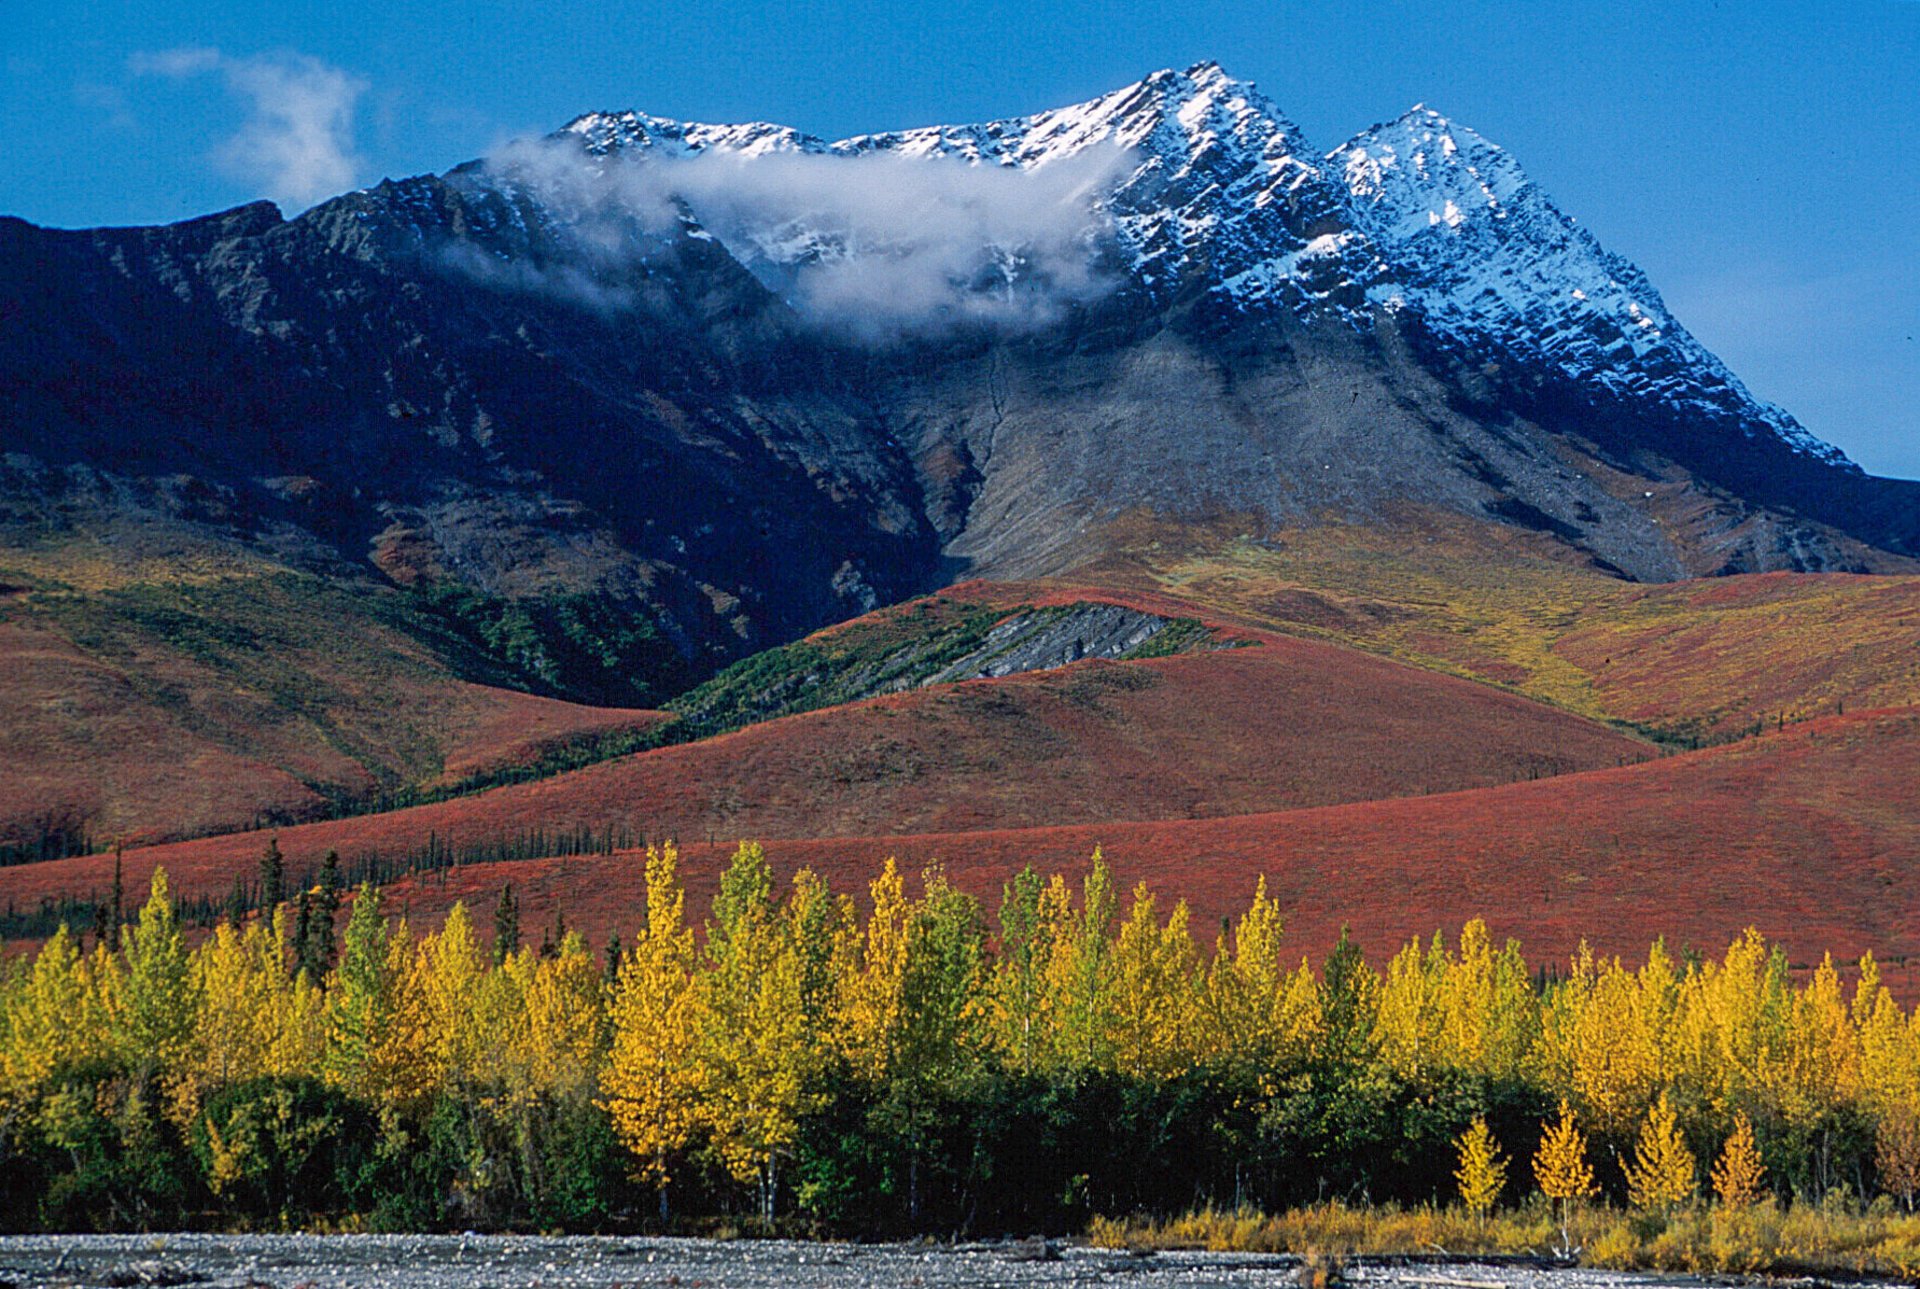 Alaska Fall Colors 